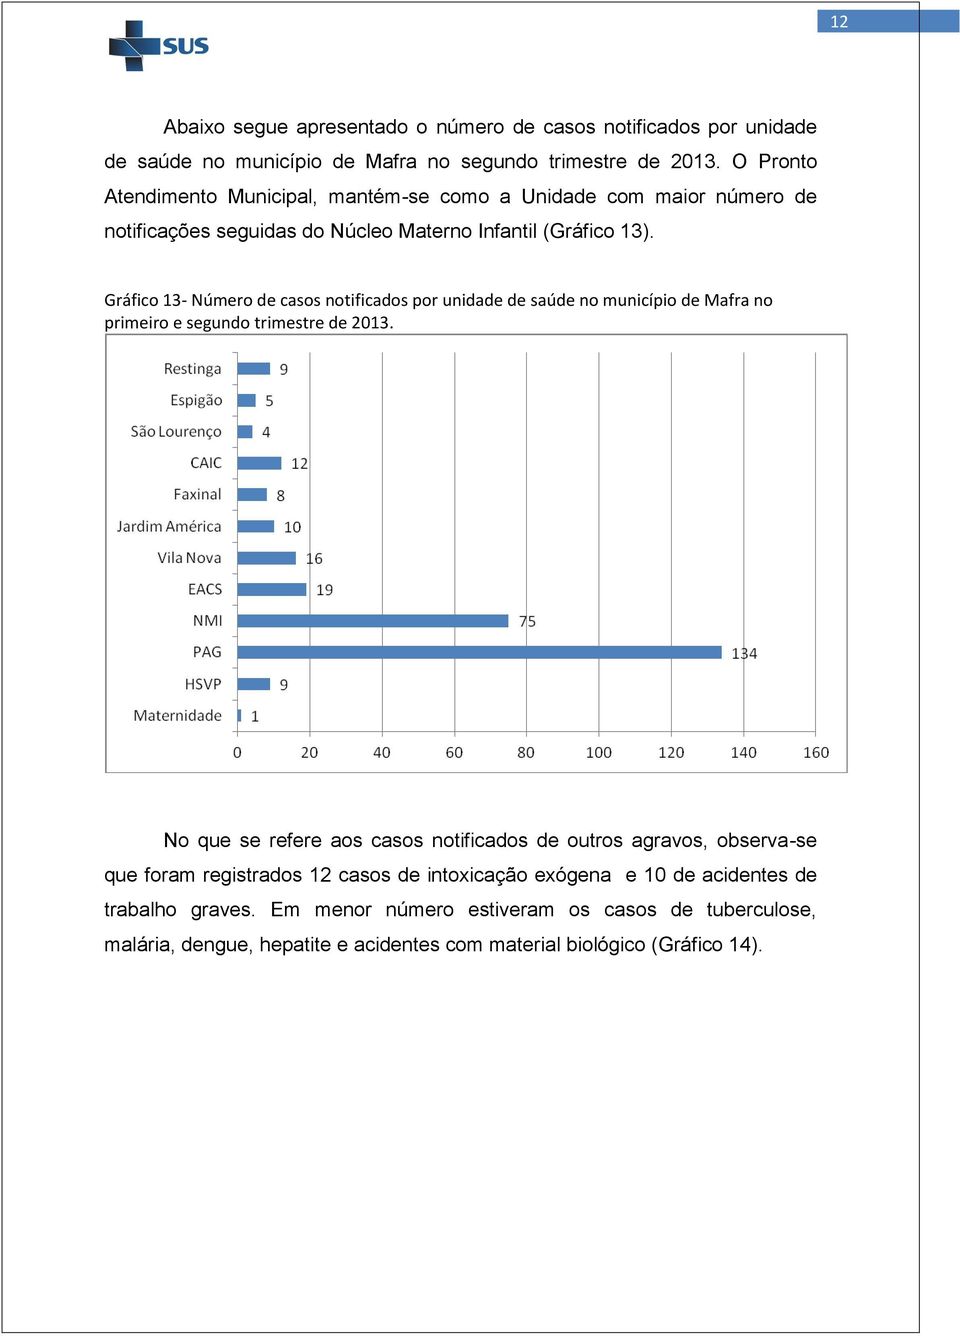 Gráfico 13- Número de casos notificados por unidade de saúde no município de Mafra no primeiro e segundo trimestre de 2013.